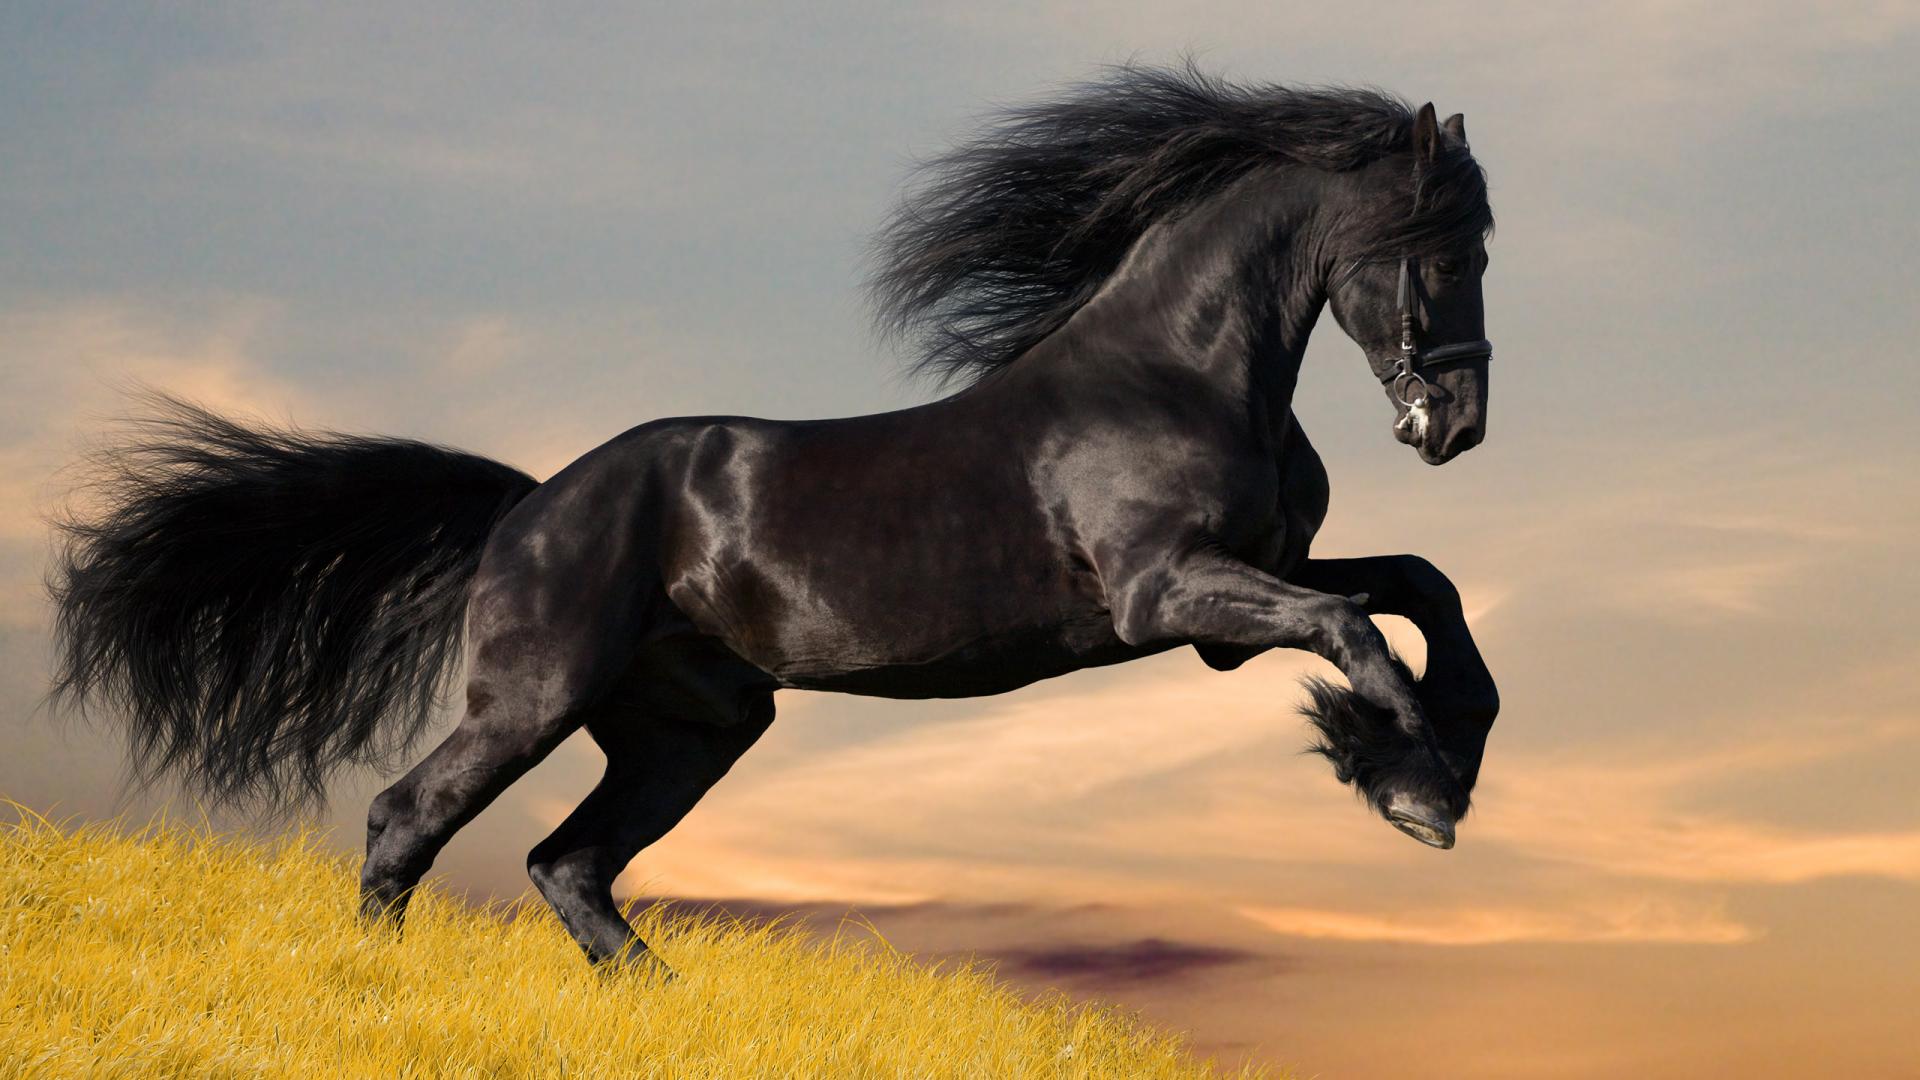 Black Animals Horse 1080p #24380 Wallpaper | High Resolution